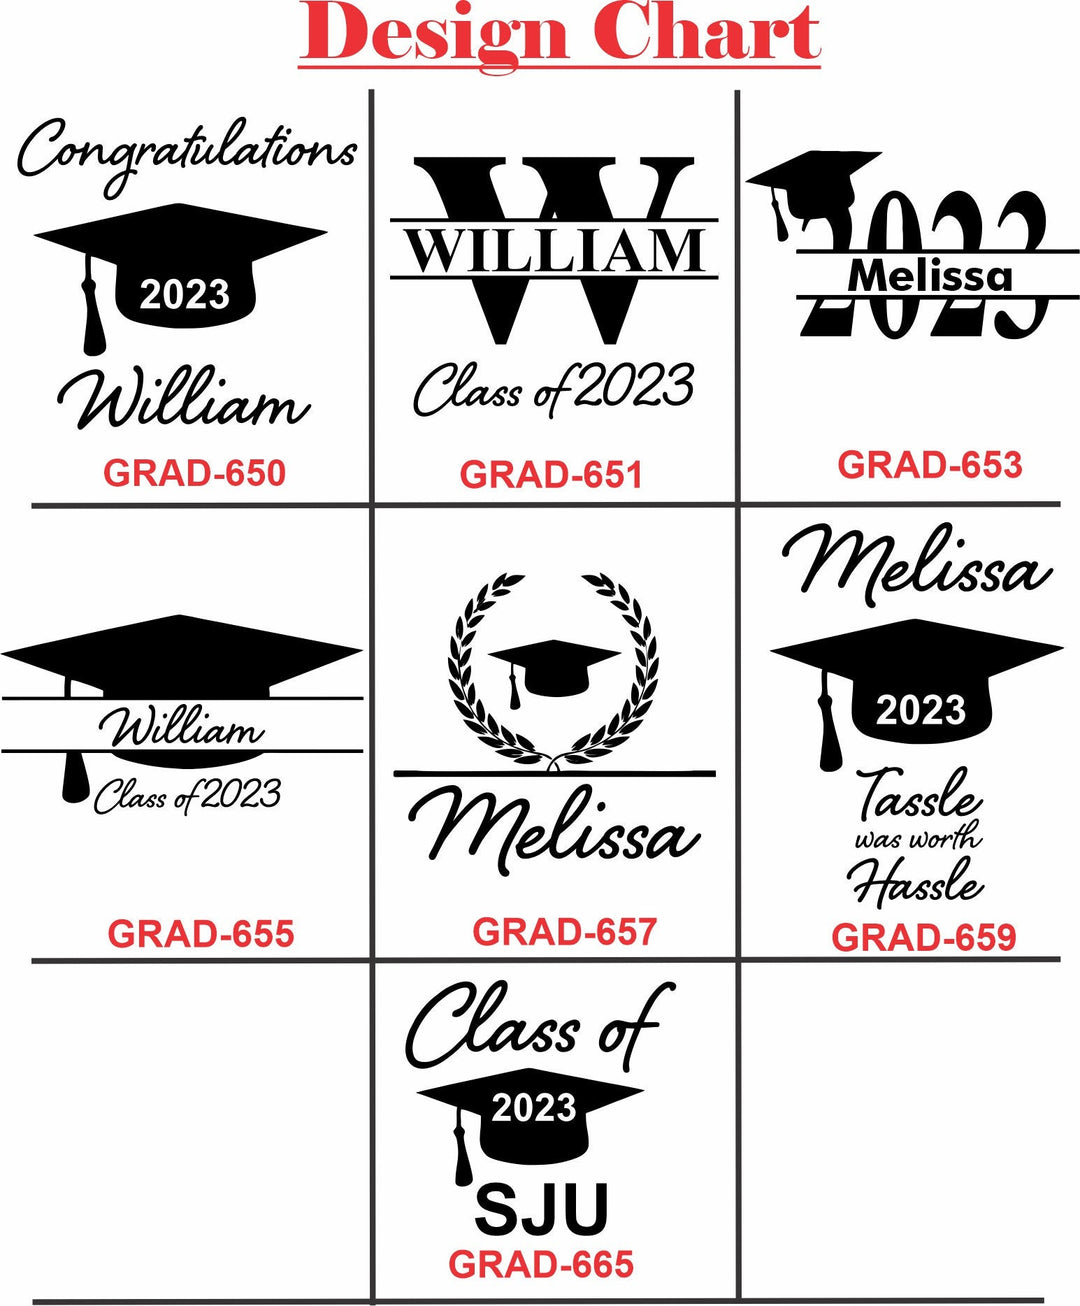 12 Pcs Personalized Graduation Wine Glass Favors, 2023 Graduate Favor, Stemless Wine Glasses, Party Favors, College, Law school, Medical